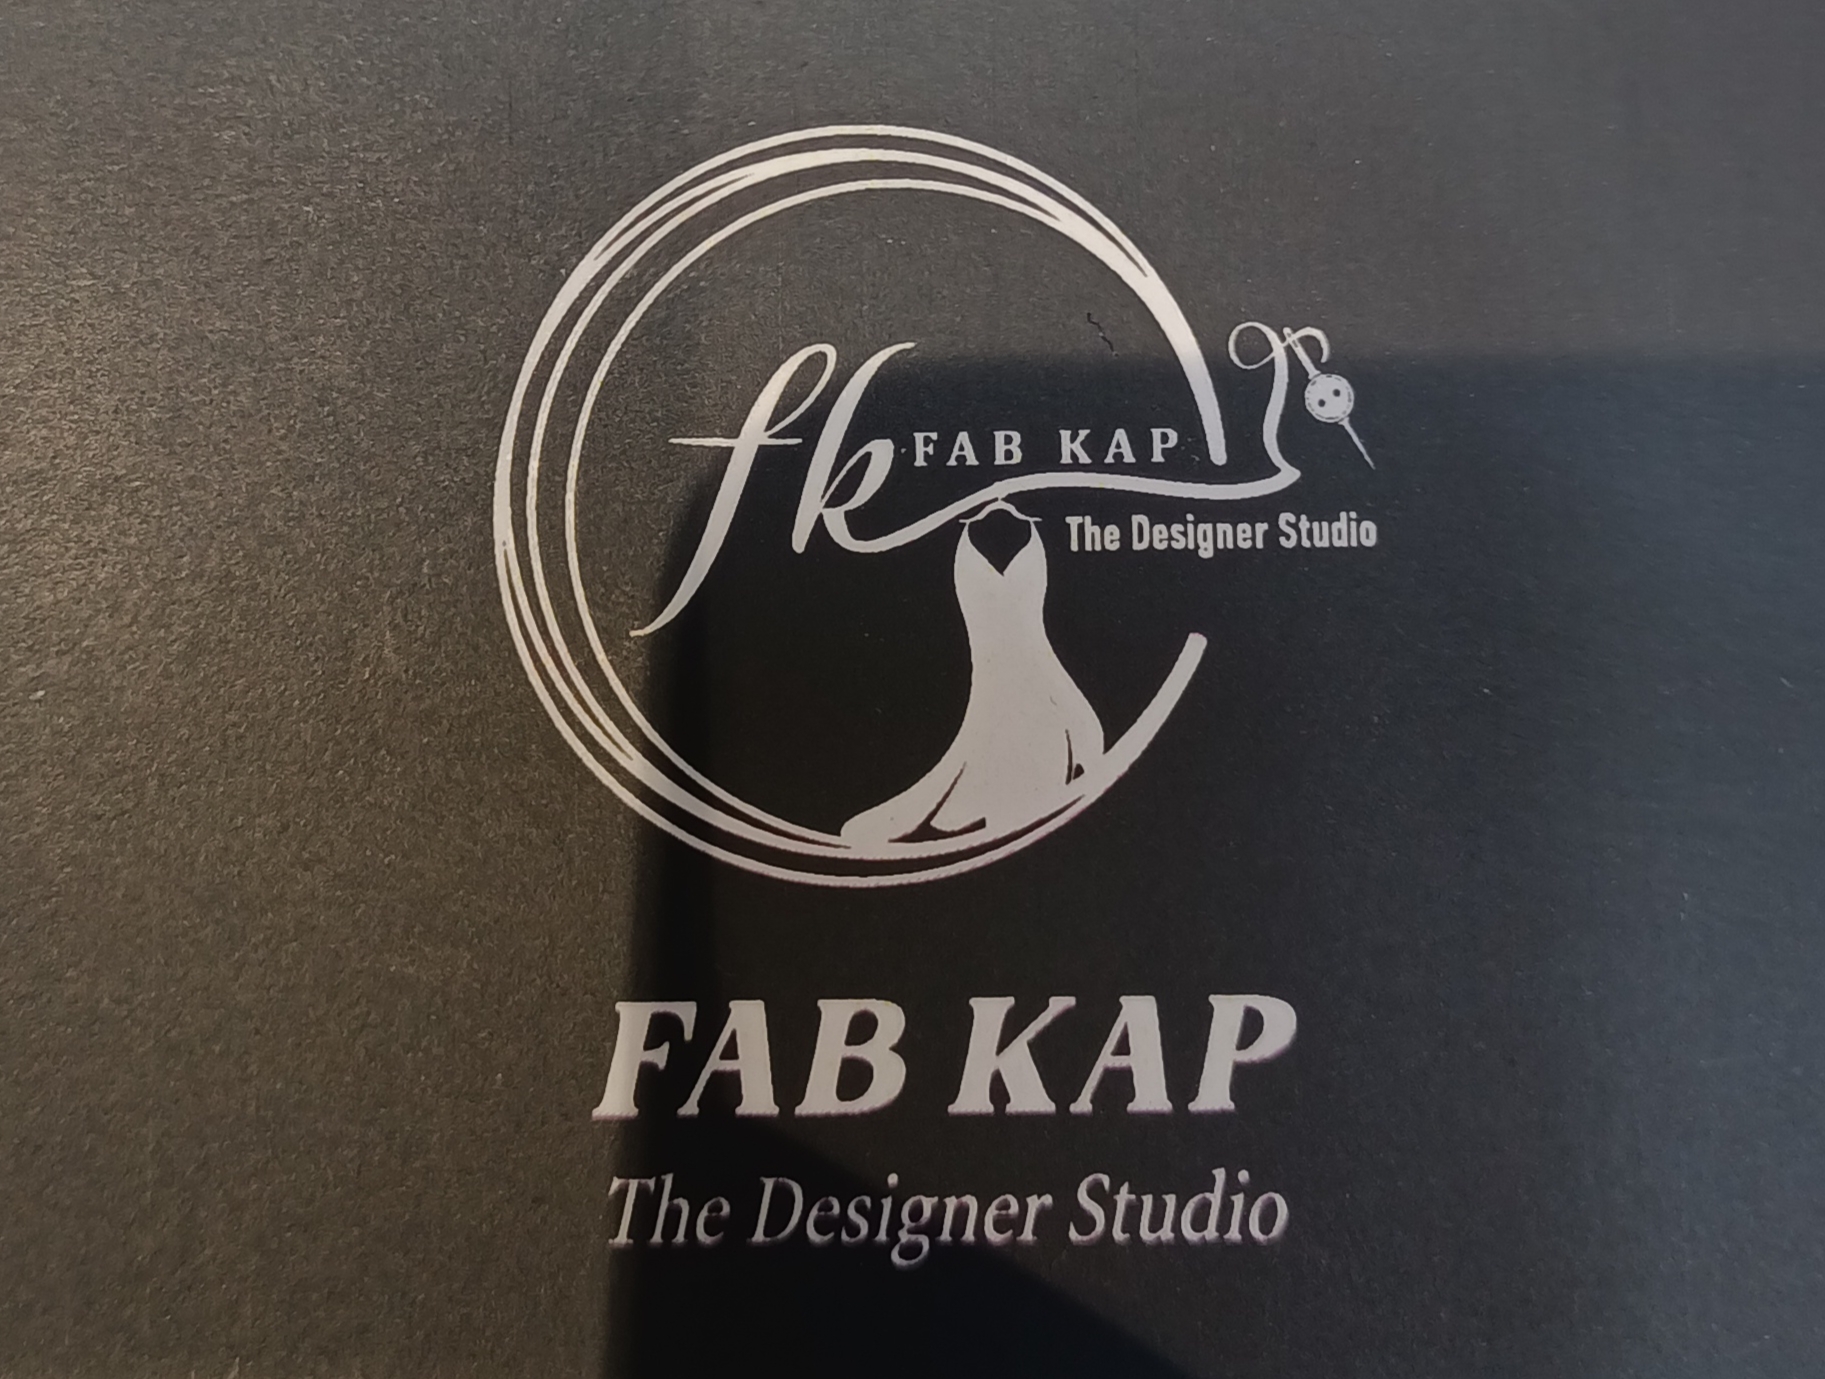 Fab kap ( the designer studio)